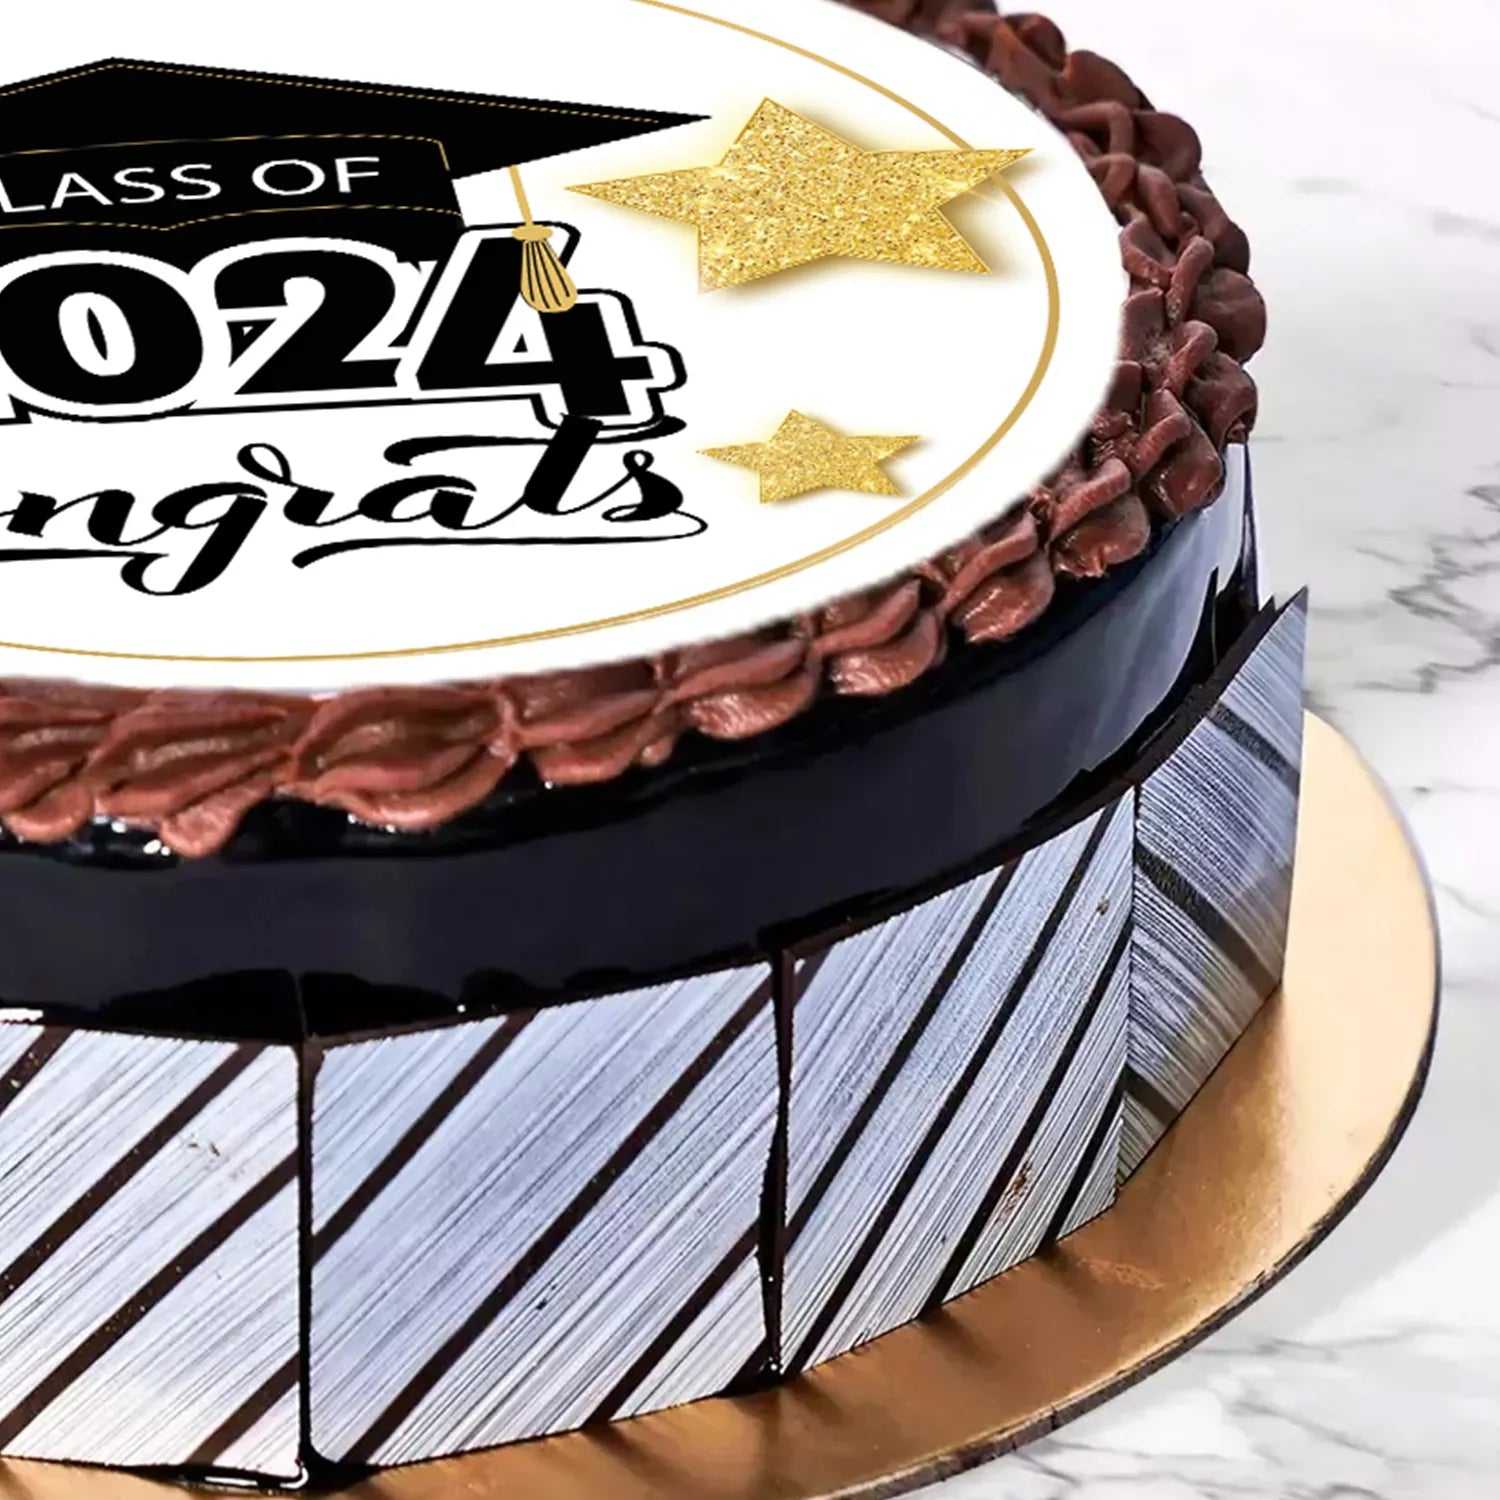 Congrats Graduate Cake